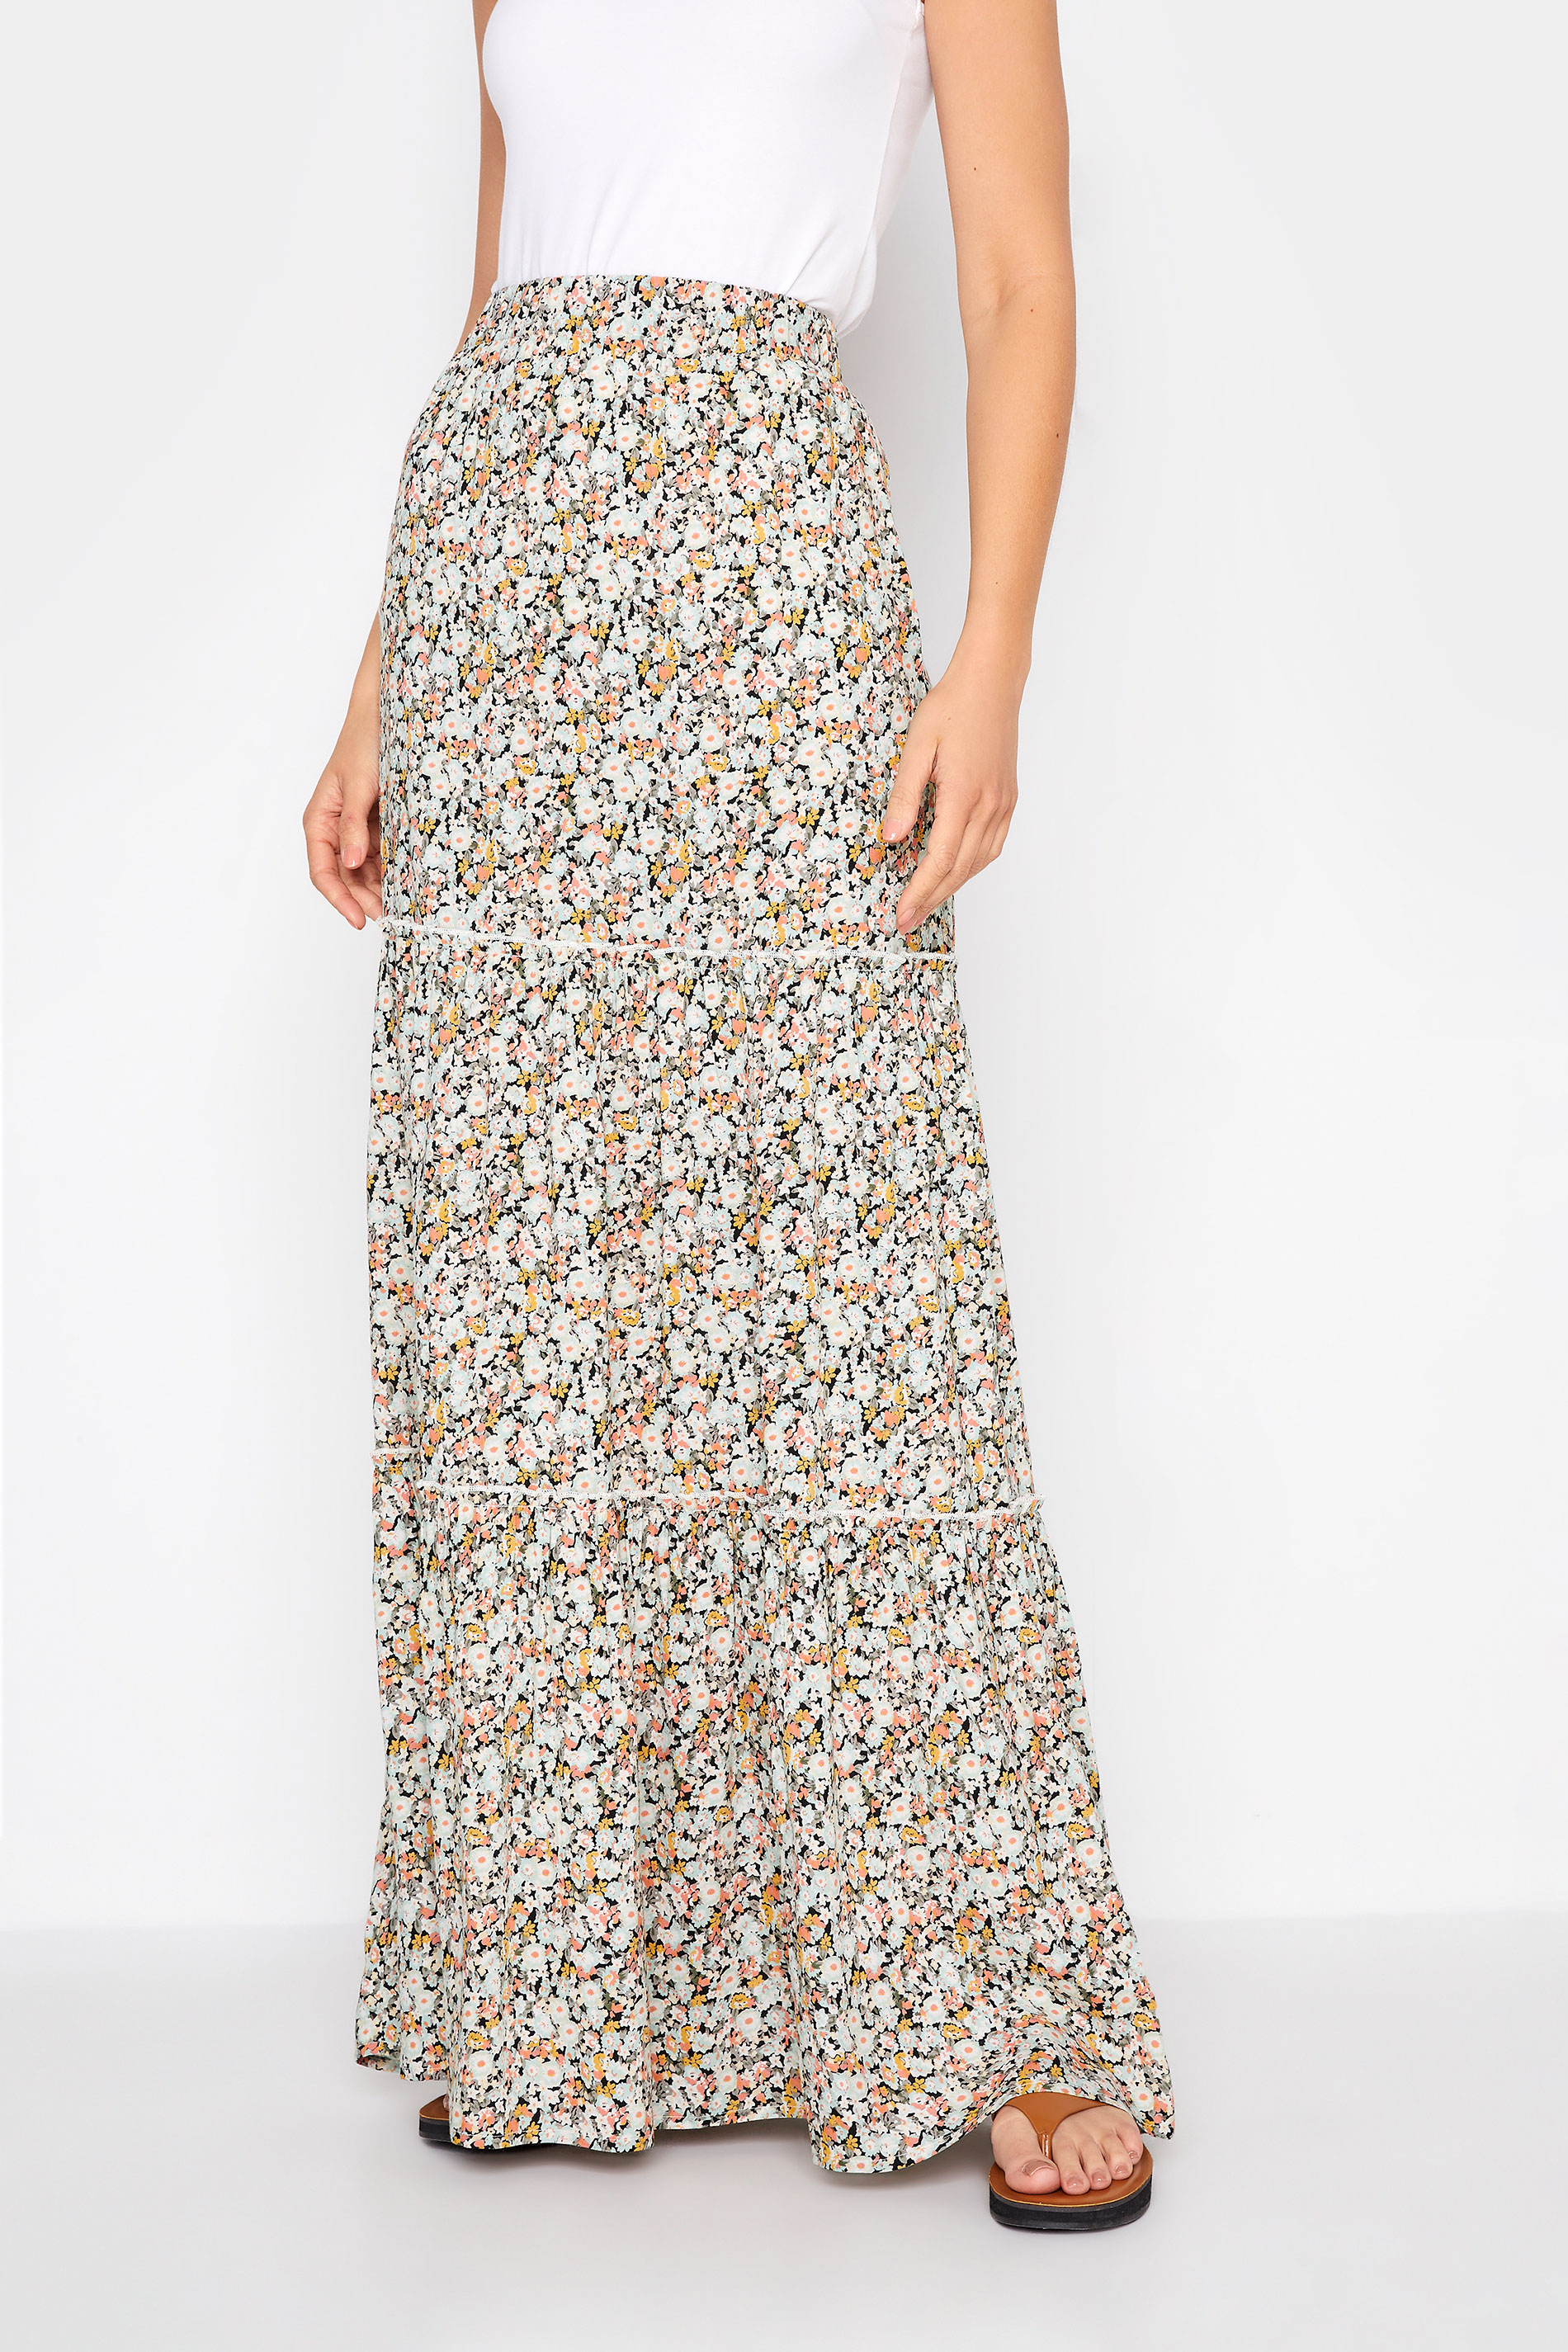 Tall Women's LTS Beige Brown Floral Tiered Maxi Skirt | Long Tall ...